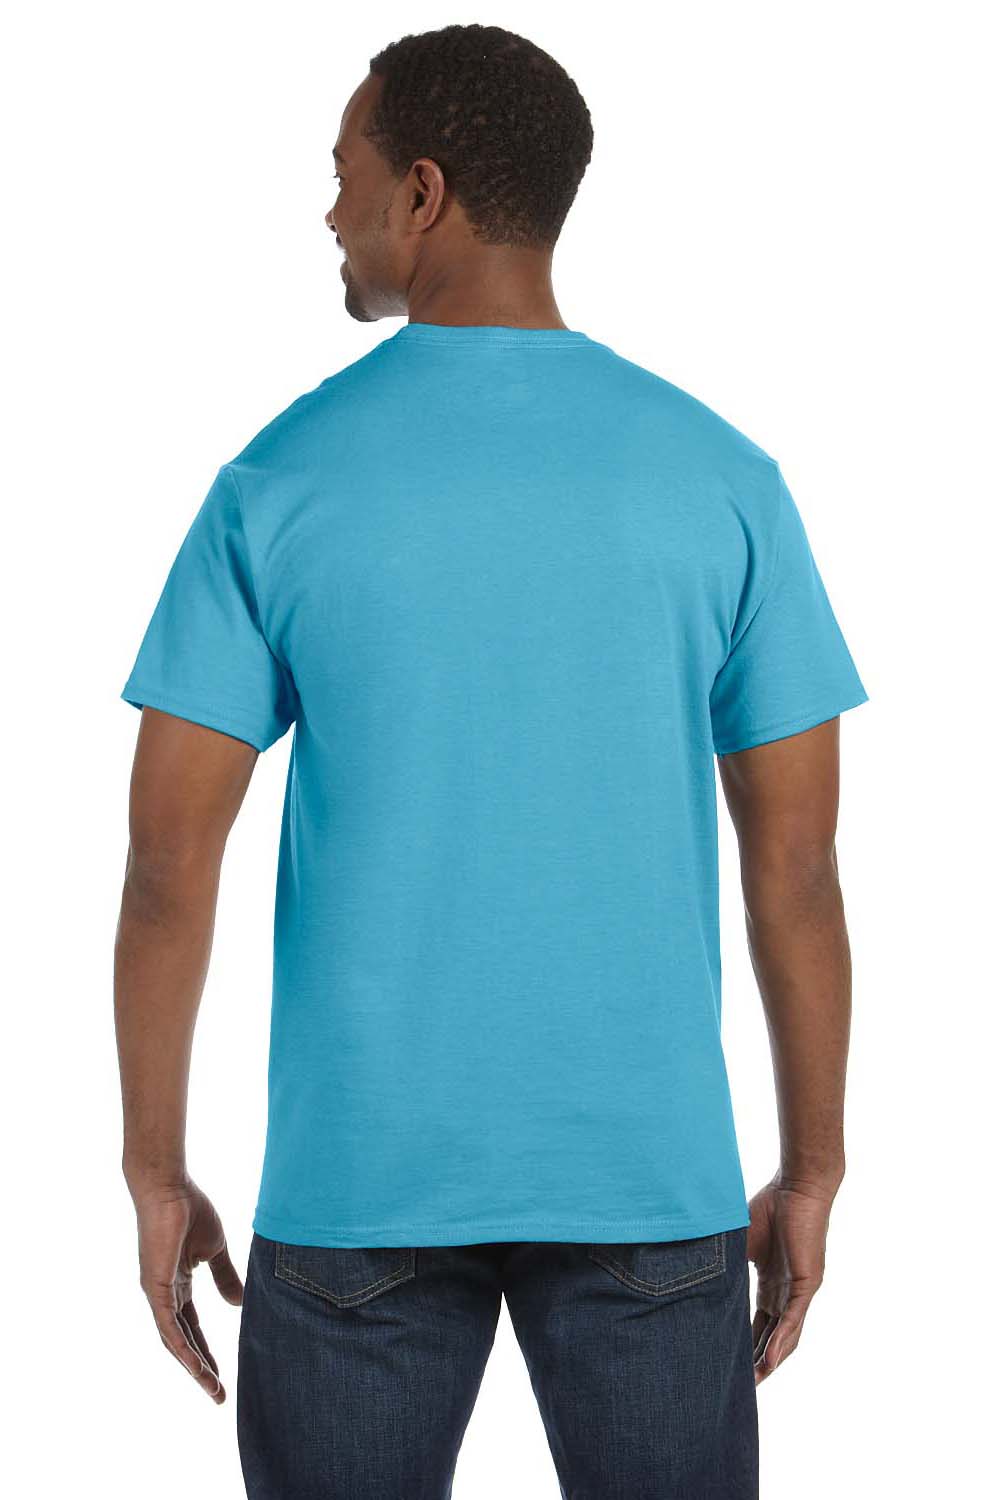 Jerzees 29M Mens Dri-Power Moisture Wicking Short Sleeve Crewneck T-Shirt Aquatic Blue Back